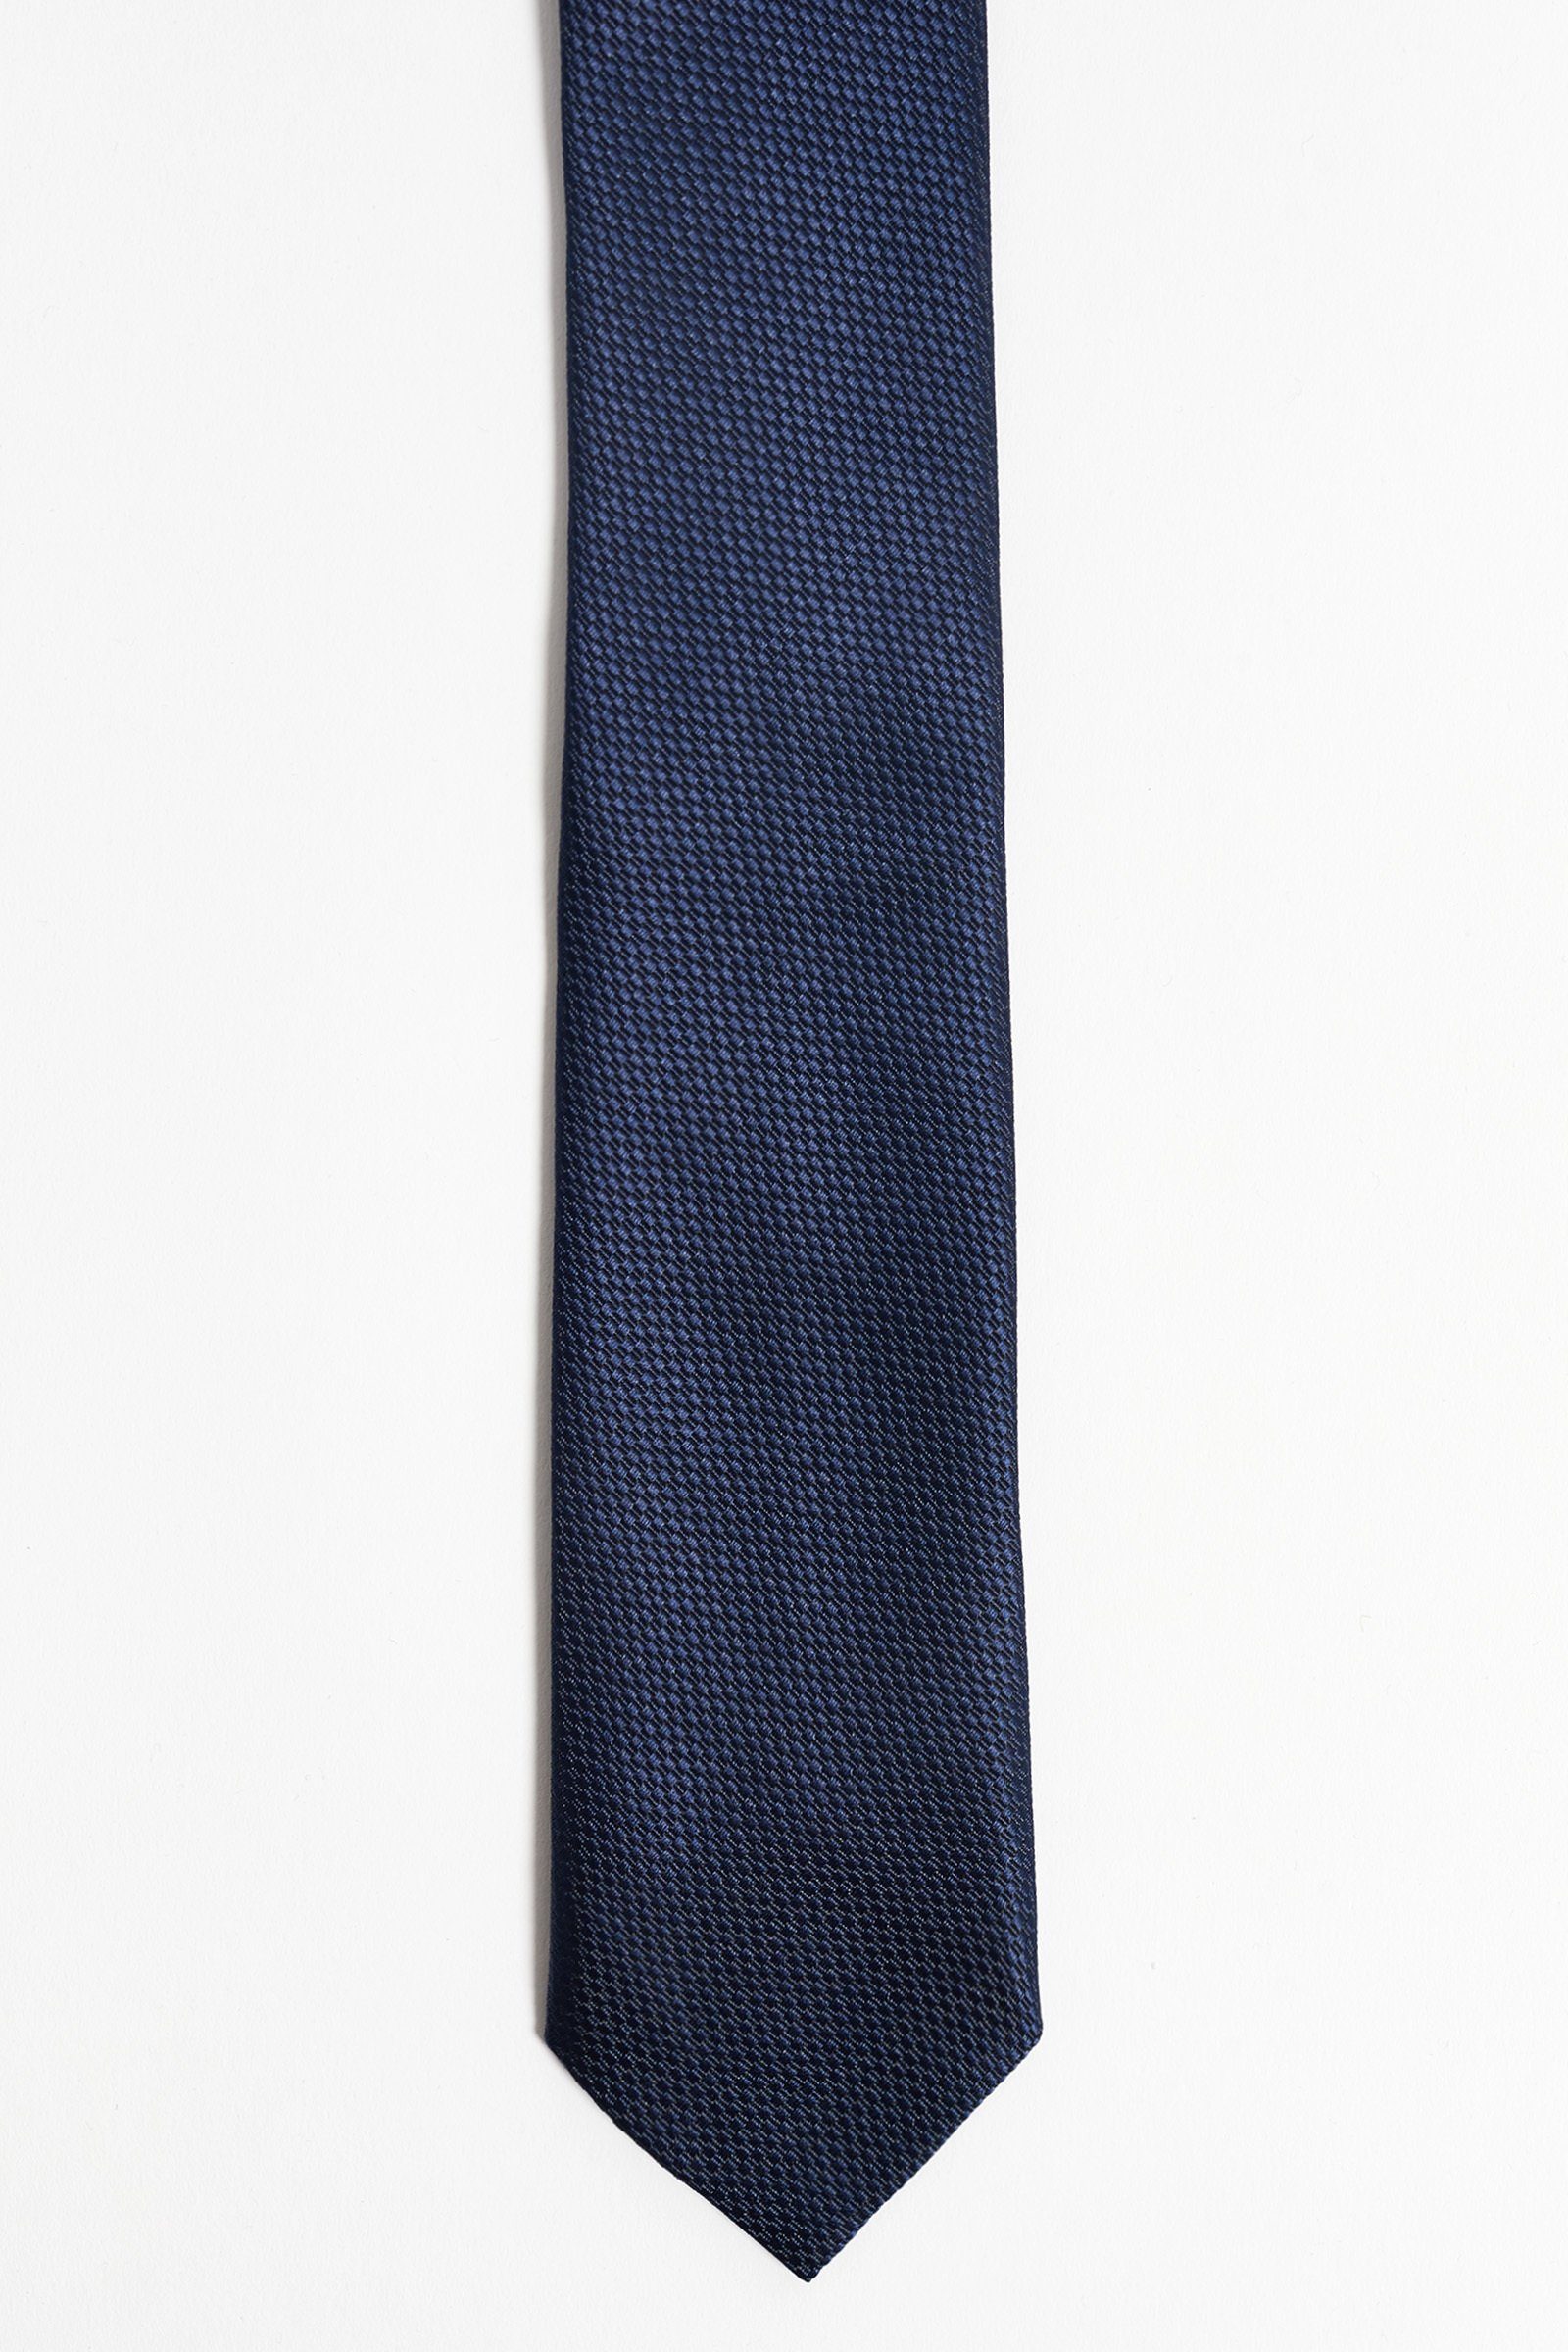 Krawatte Fashion WE Dunkelblau